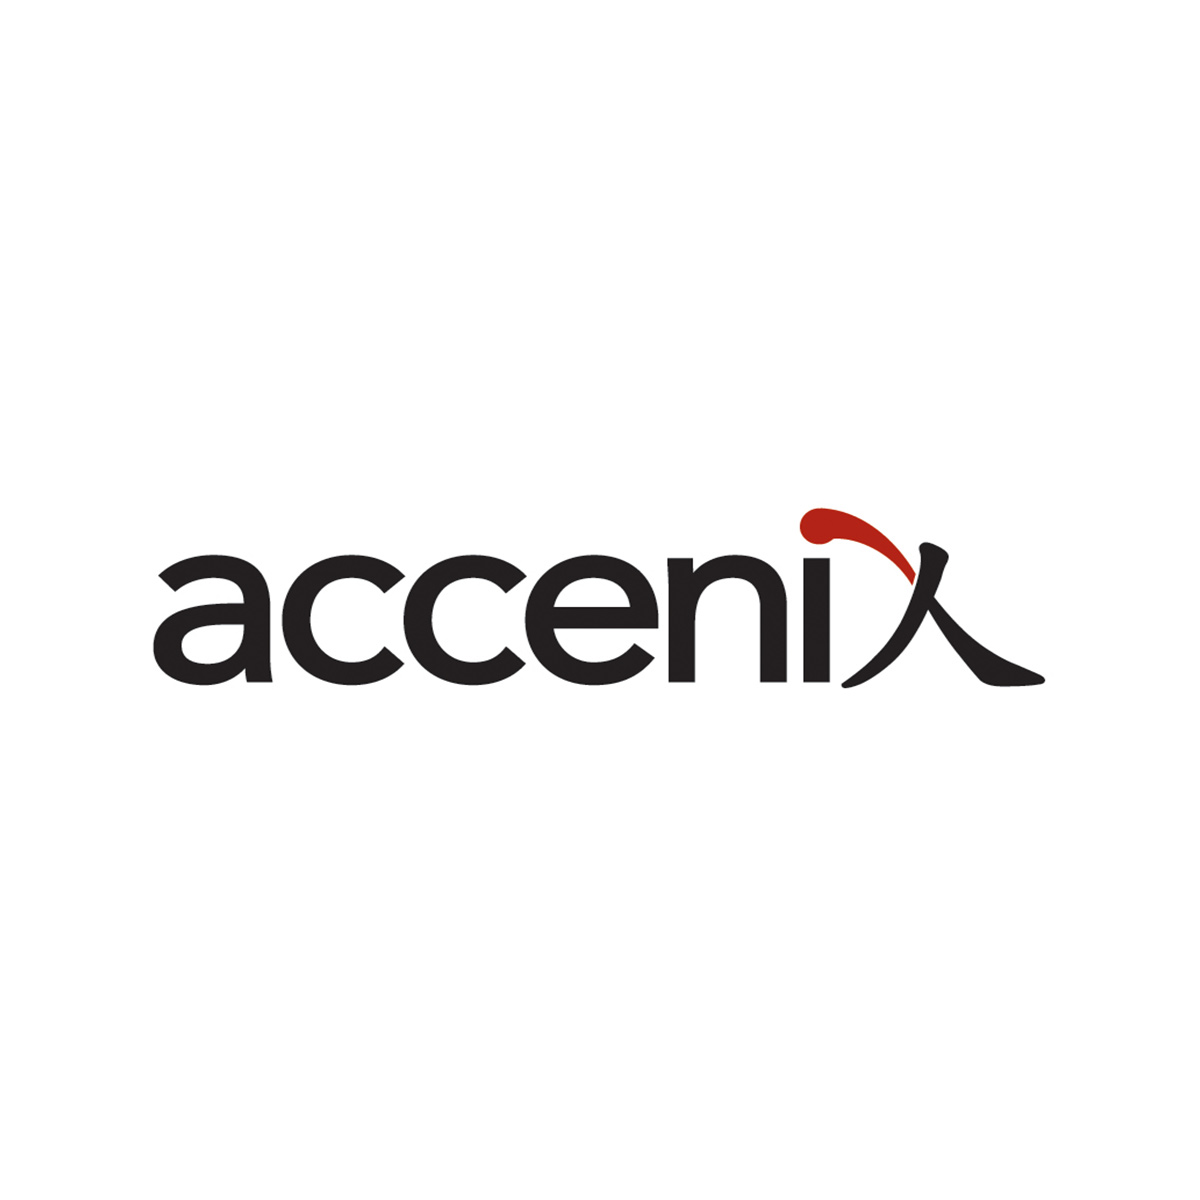 Accenix Logo